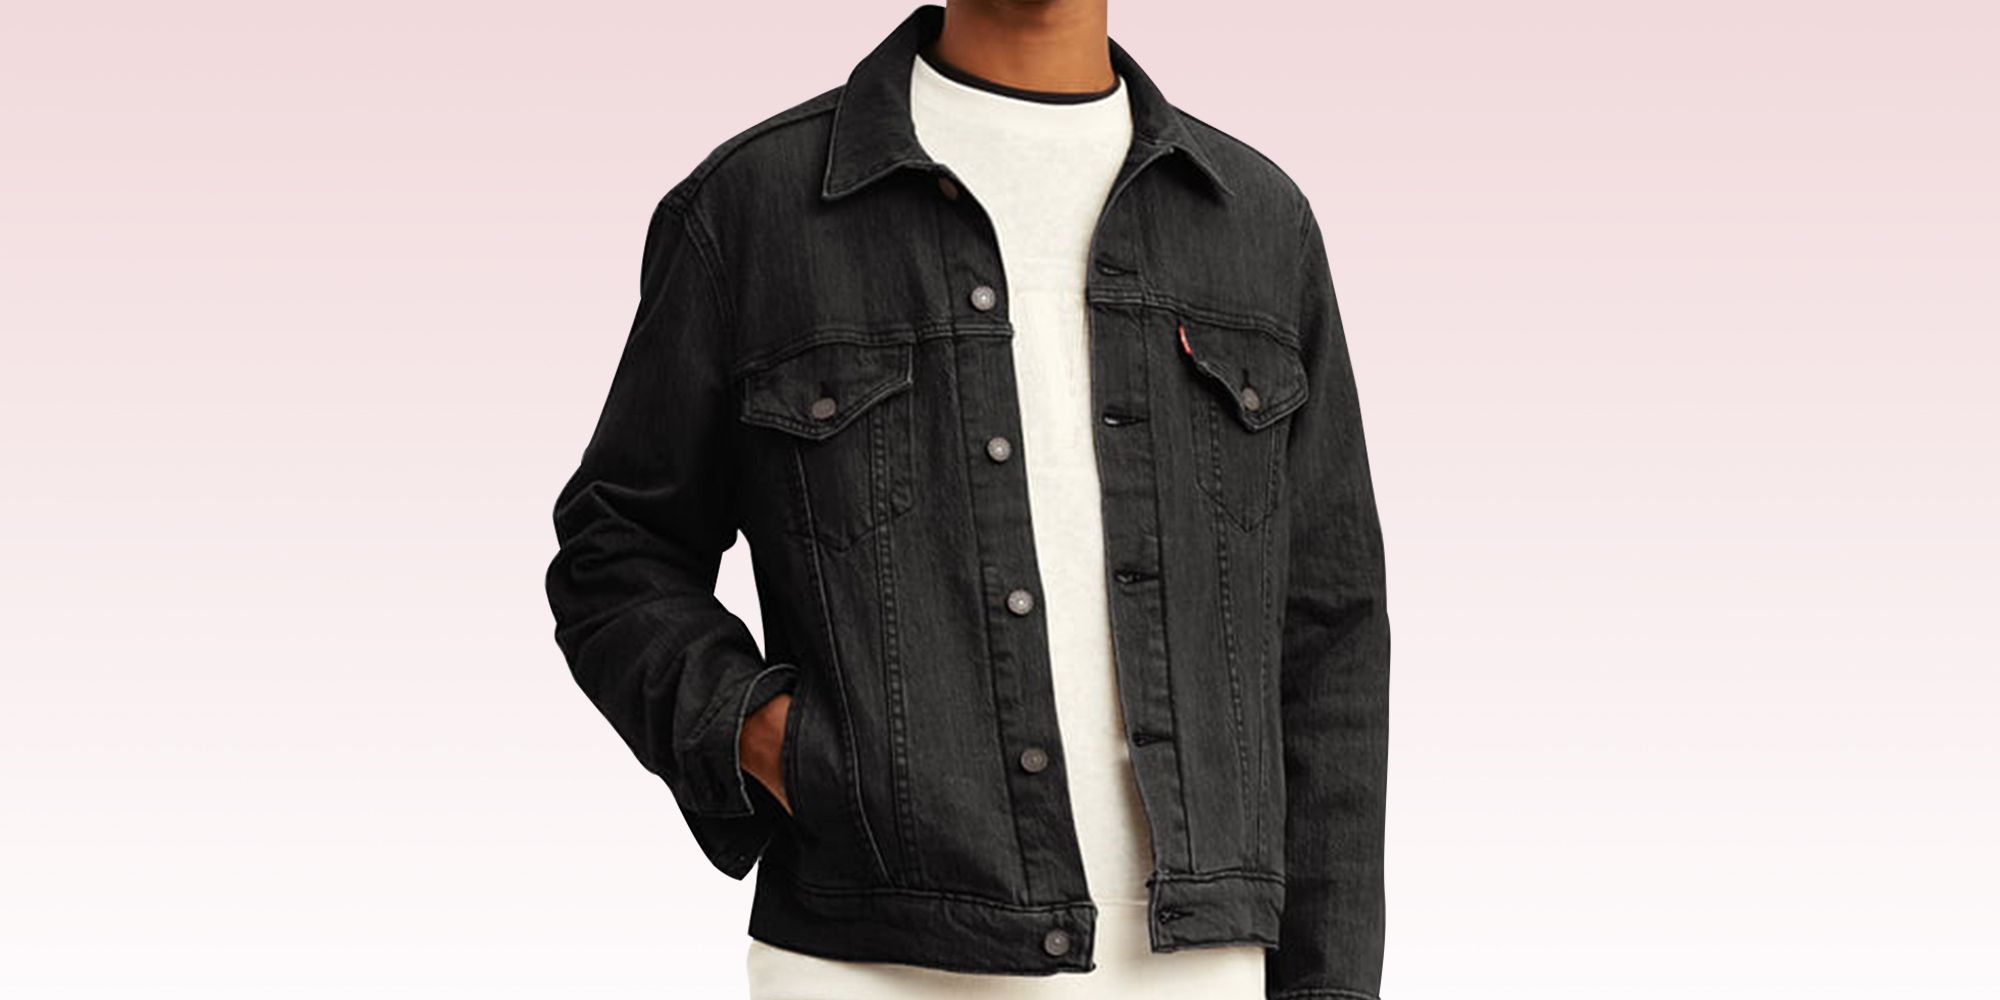 Used Jean Jackets For Sale Outlet, 54% OFF | kenyalaw.org